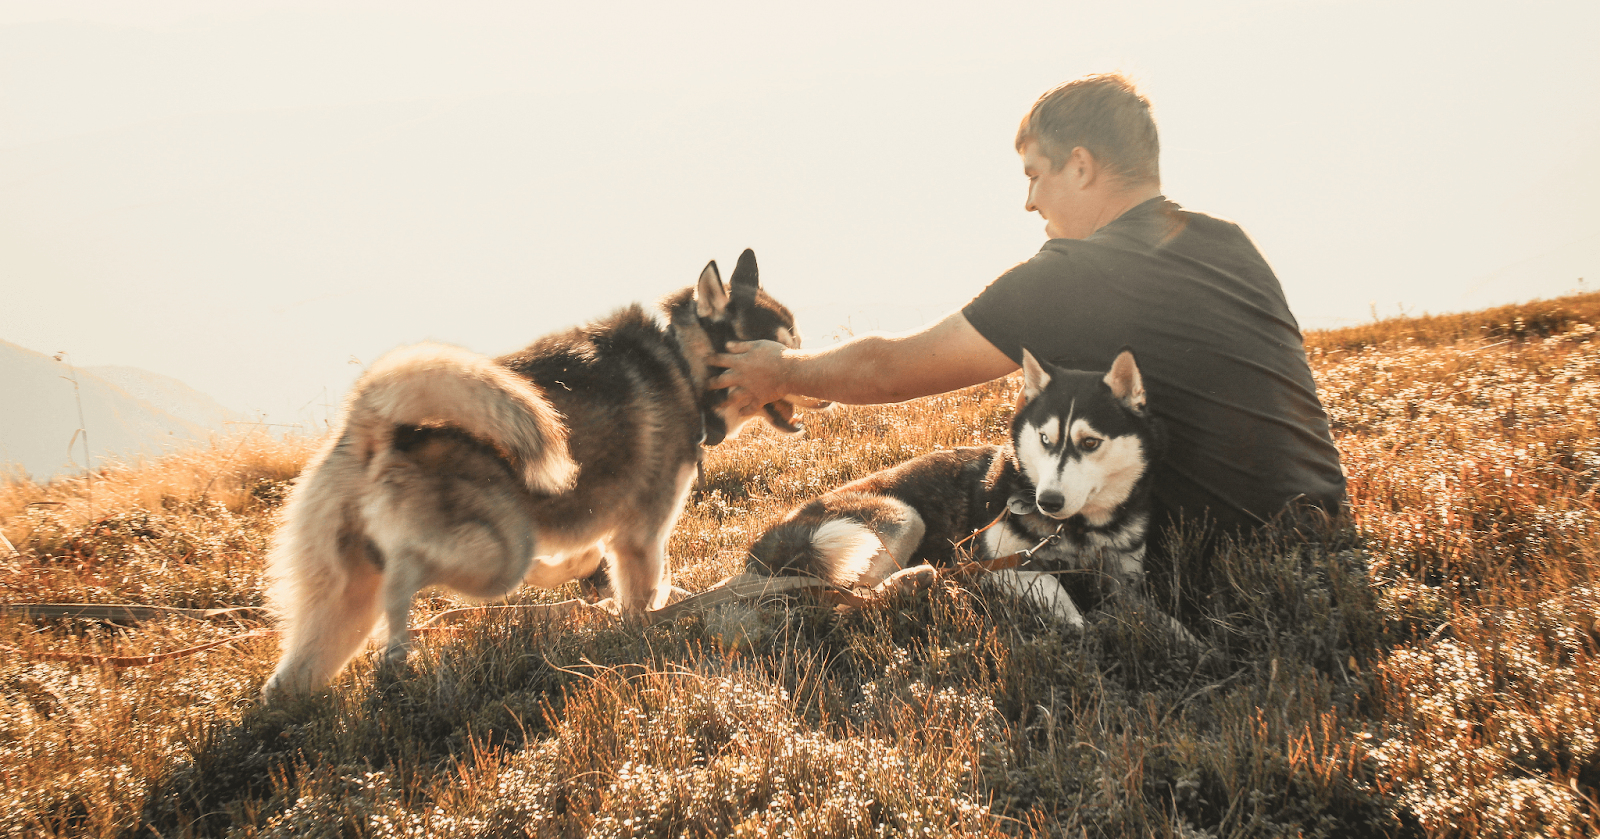 husky dogs on hillside with man